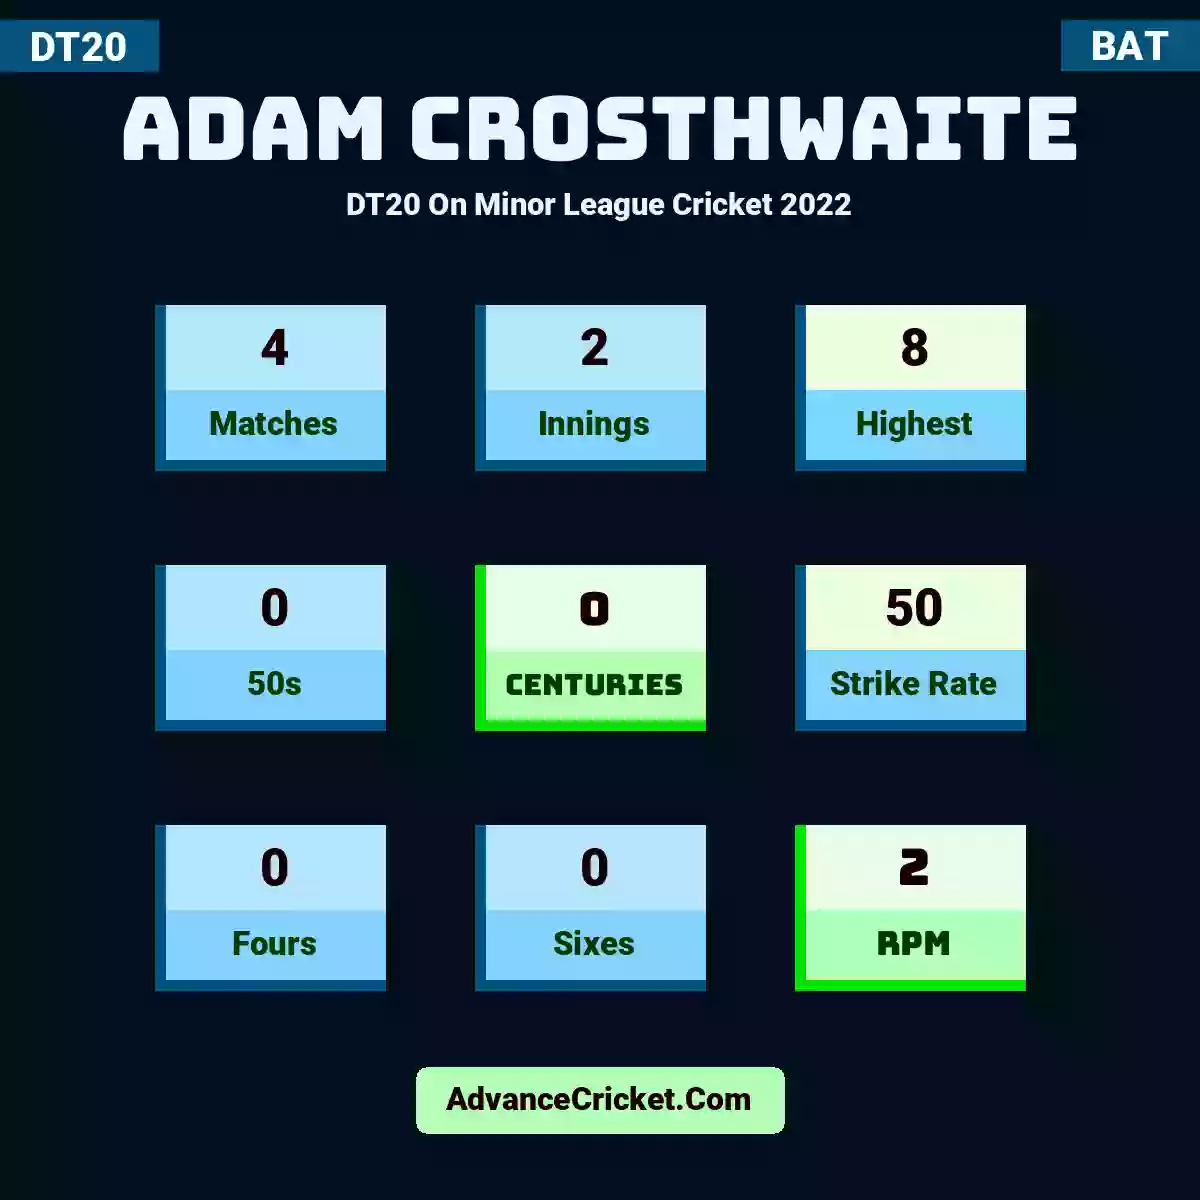 Adam Crosthwaite DT20  On Minor League Cricket 2022, Adam Crosthwaite played 4 matches, scored 8 runs as highest, 0 half-centuries, and 0 centuries, with a strike rate of 50. A.Crosthwaite hit 0 fours and 0 sixes, with an RPM of 2.